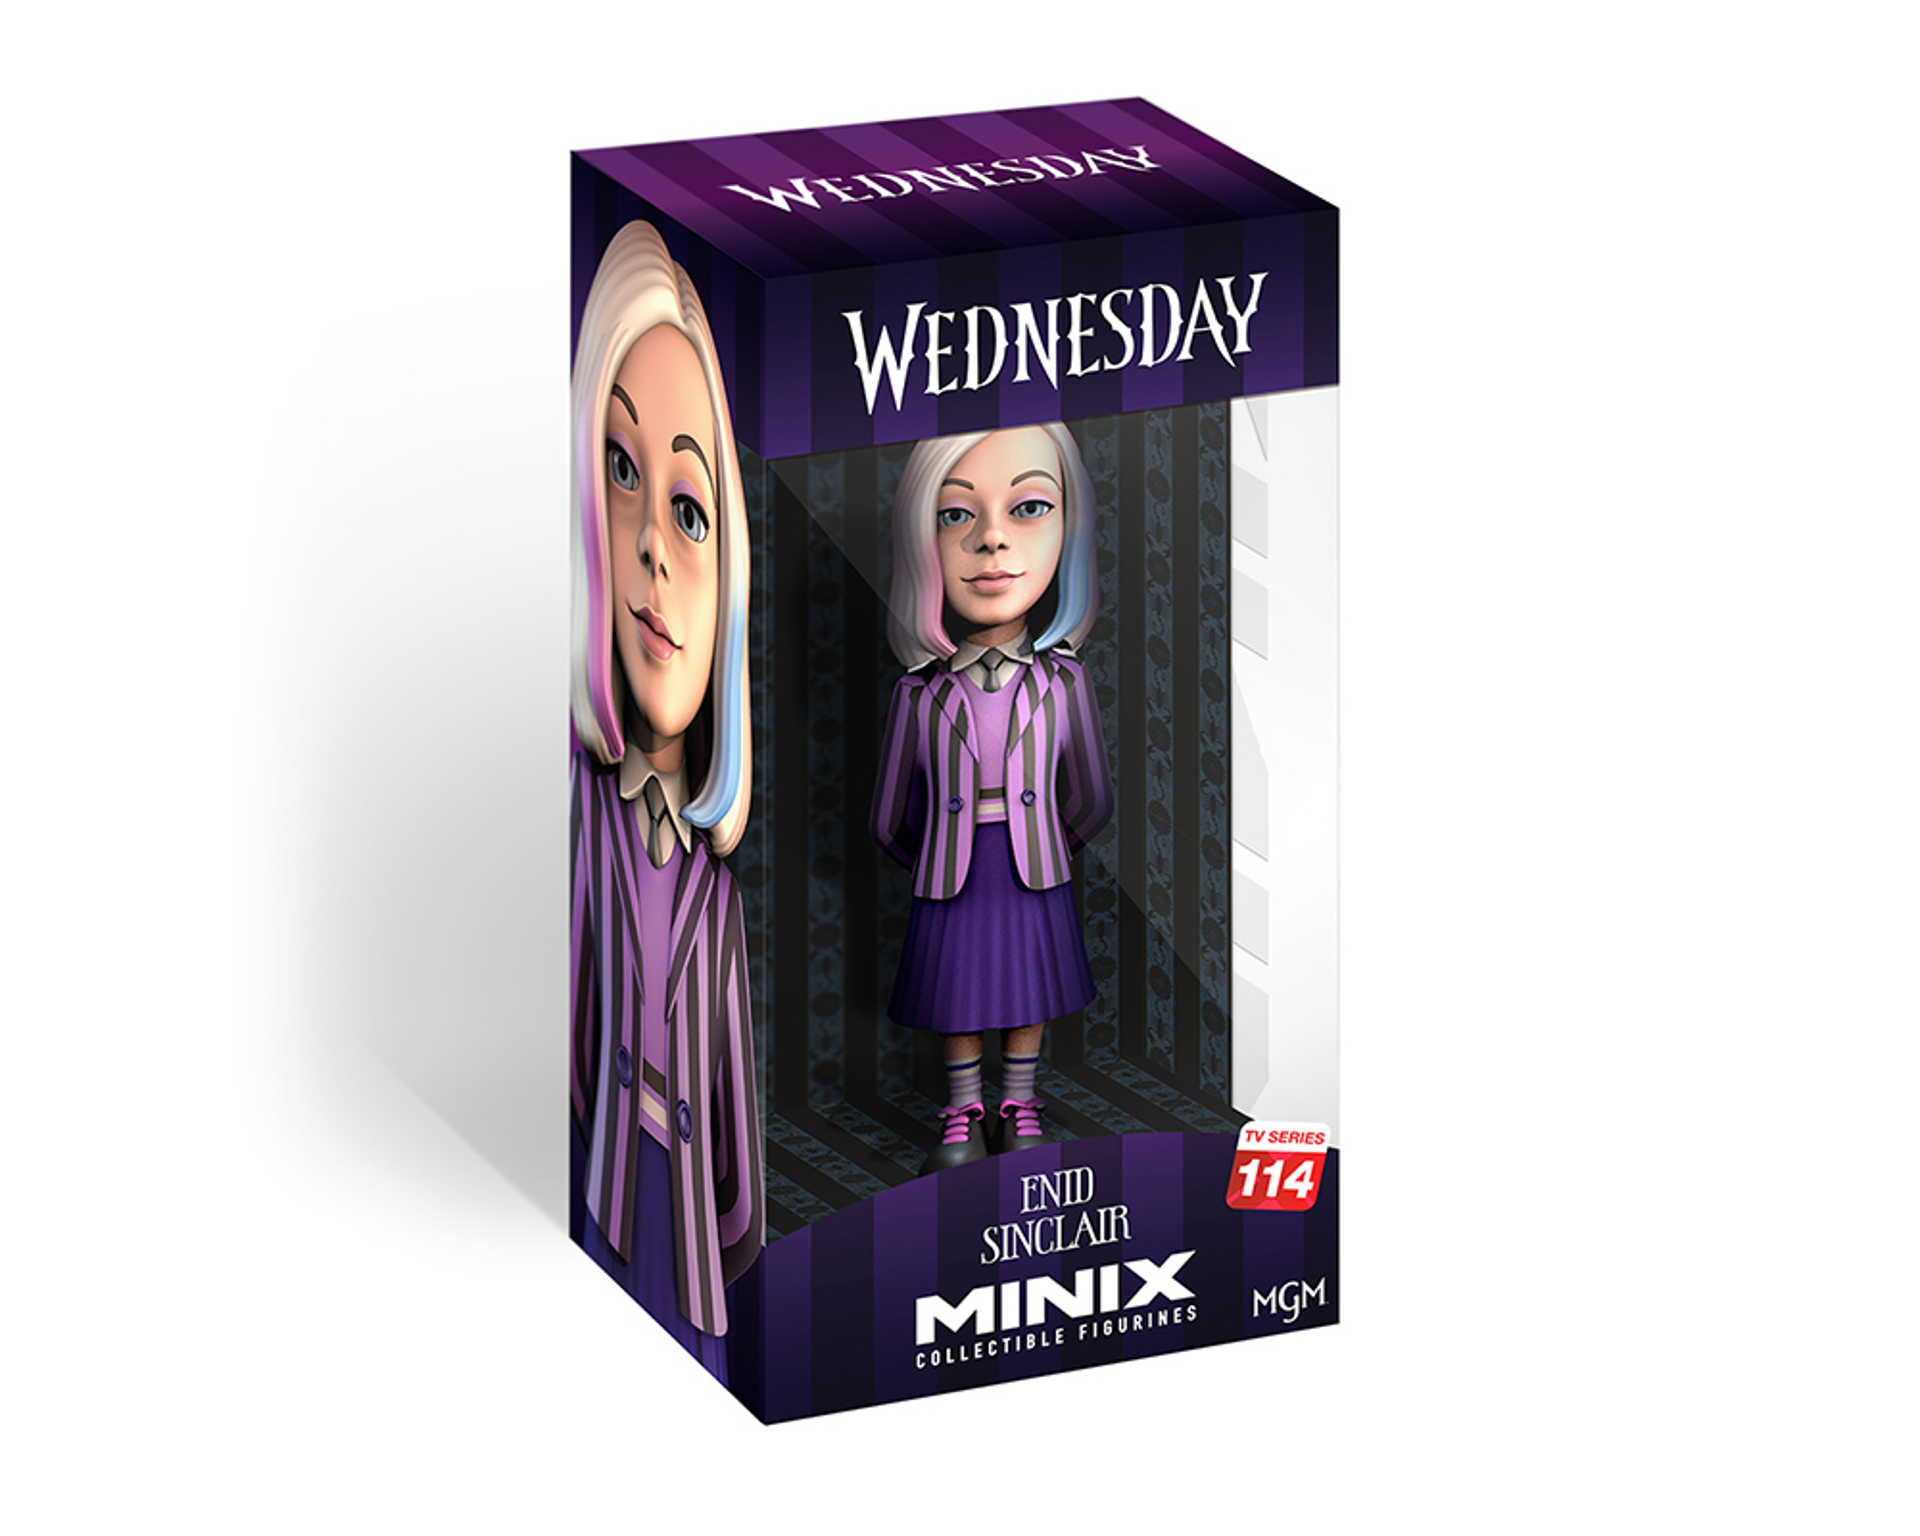 Minix -TV SERIES -WEDNESDAY -ENID SINCLAIR -Figurine -12 cm